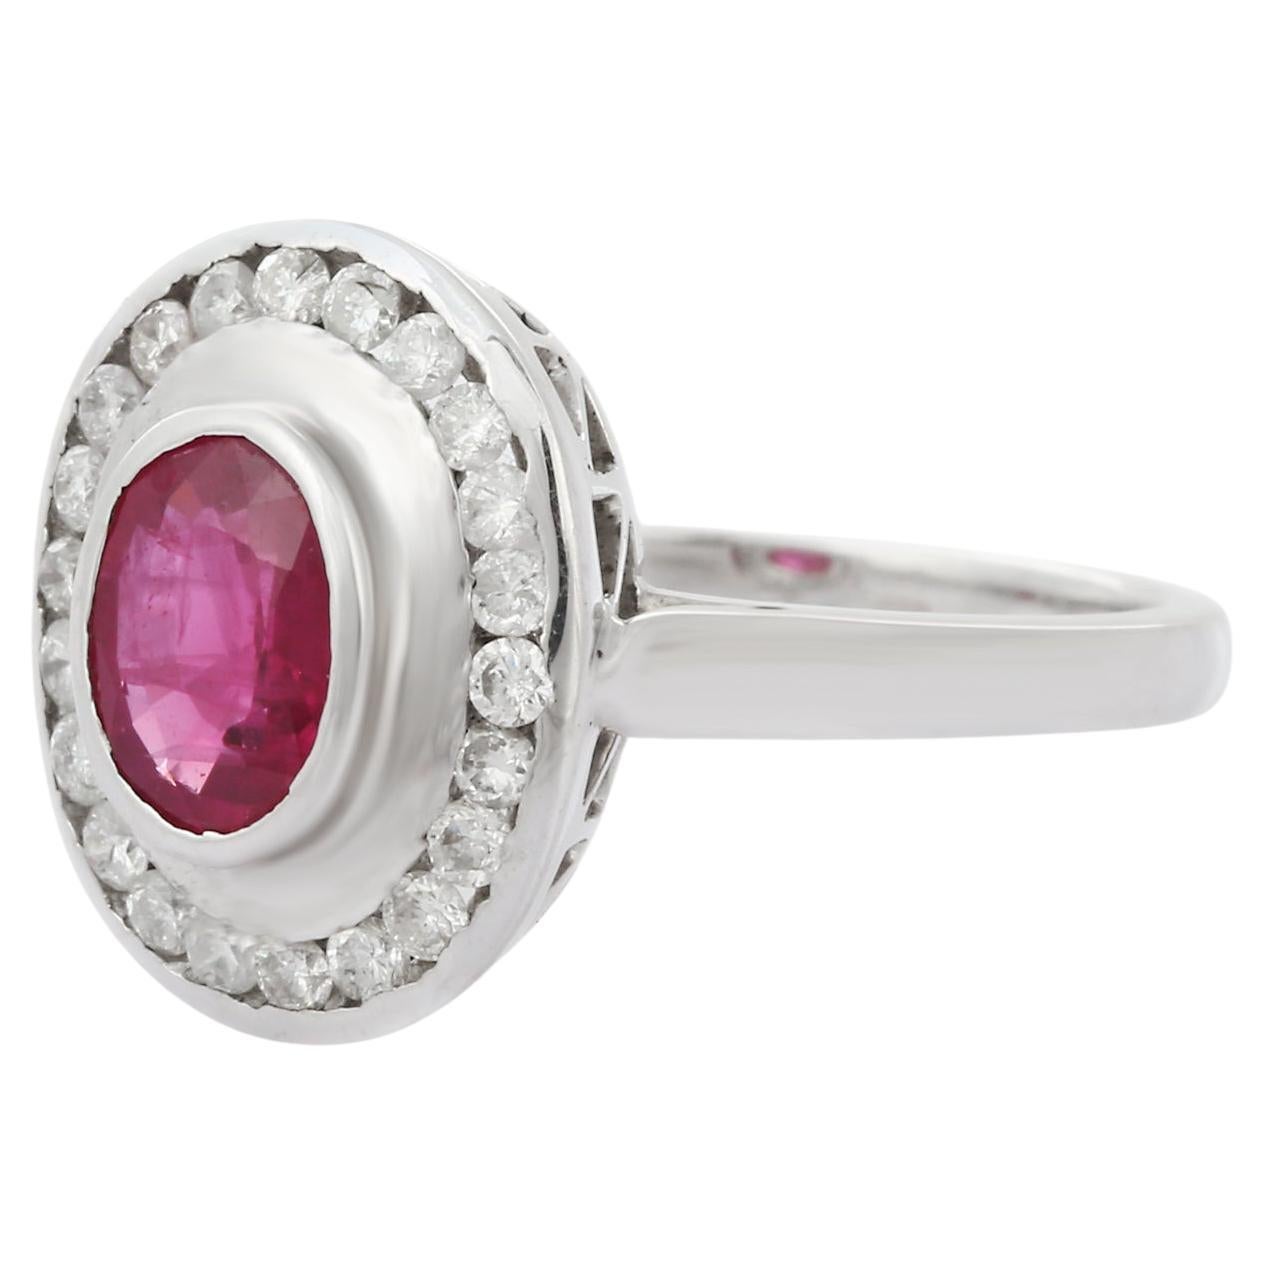 For Sale:  Bezel Set Oval Shape Ruby Diamond Cocktail Ring in 18K White Gold 5